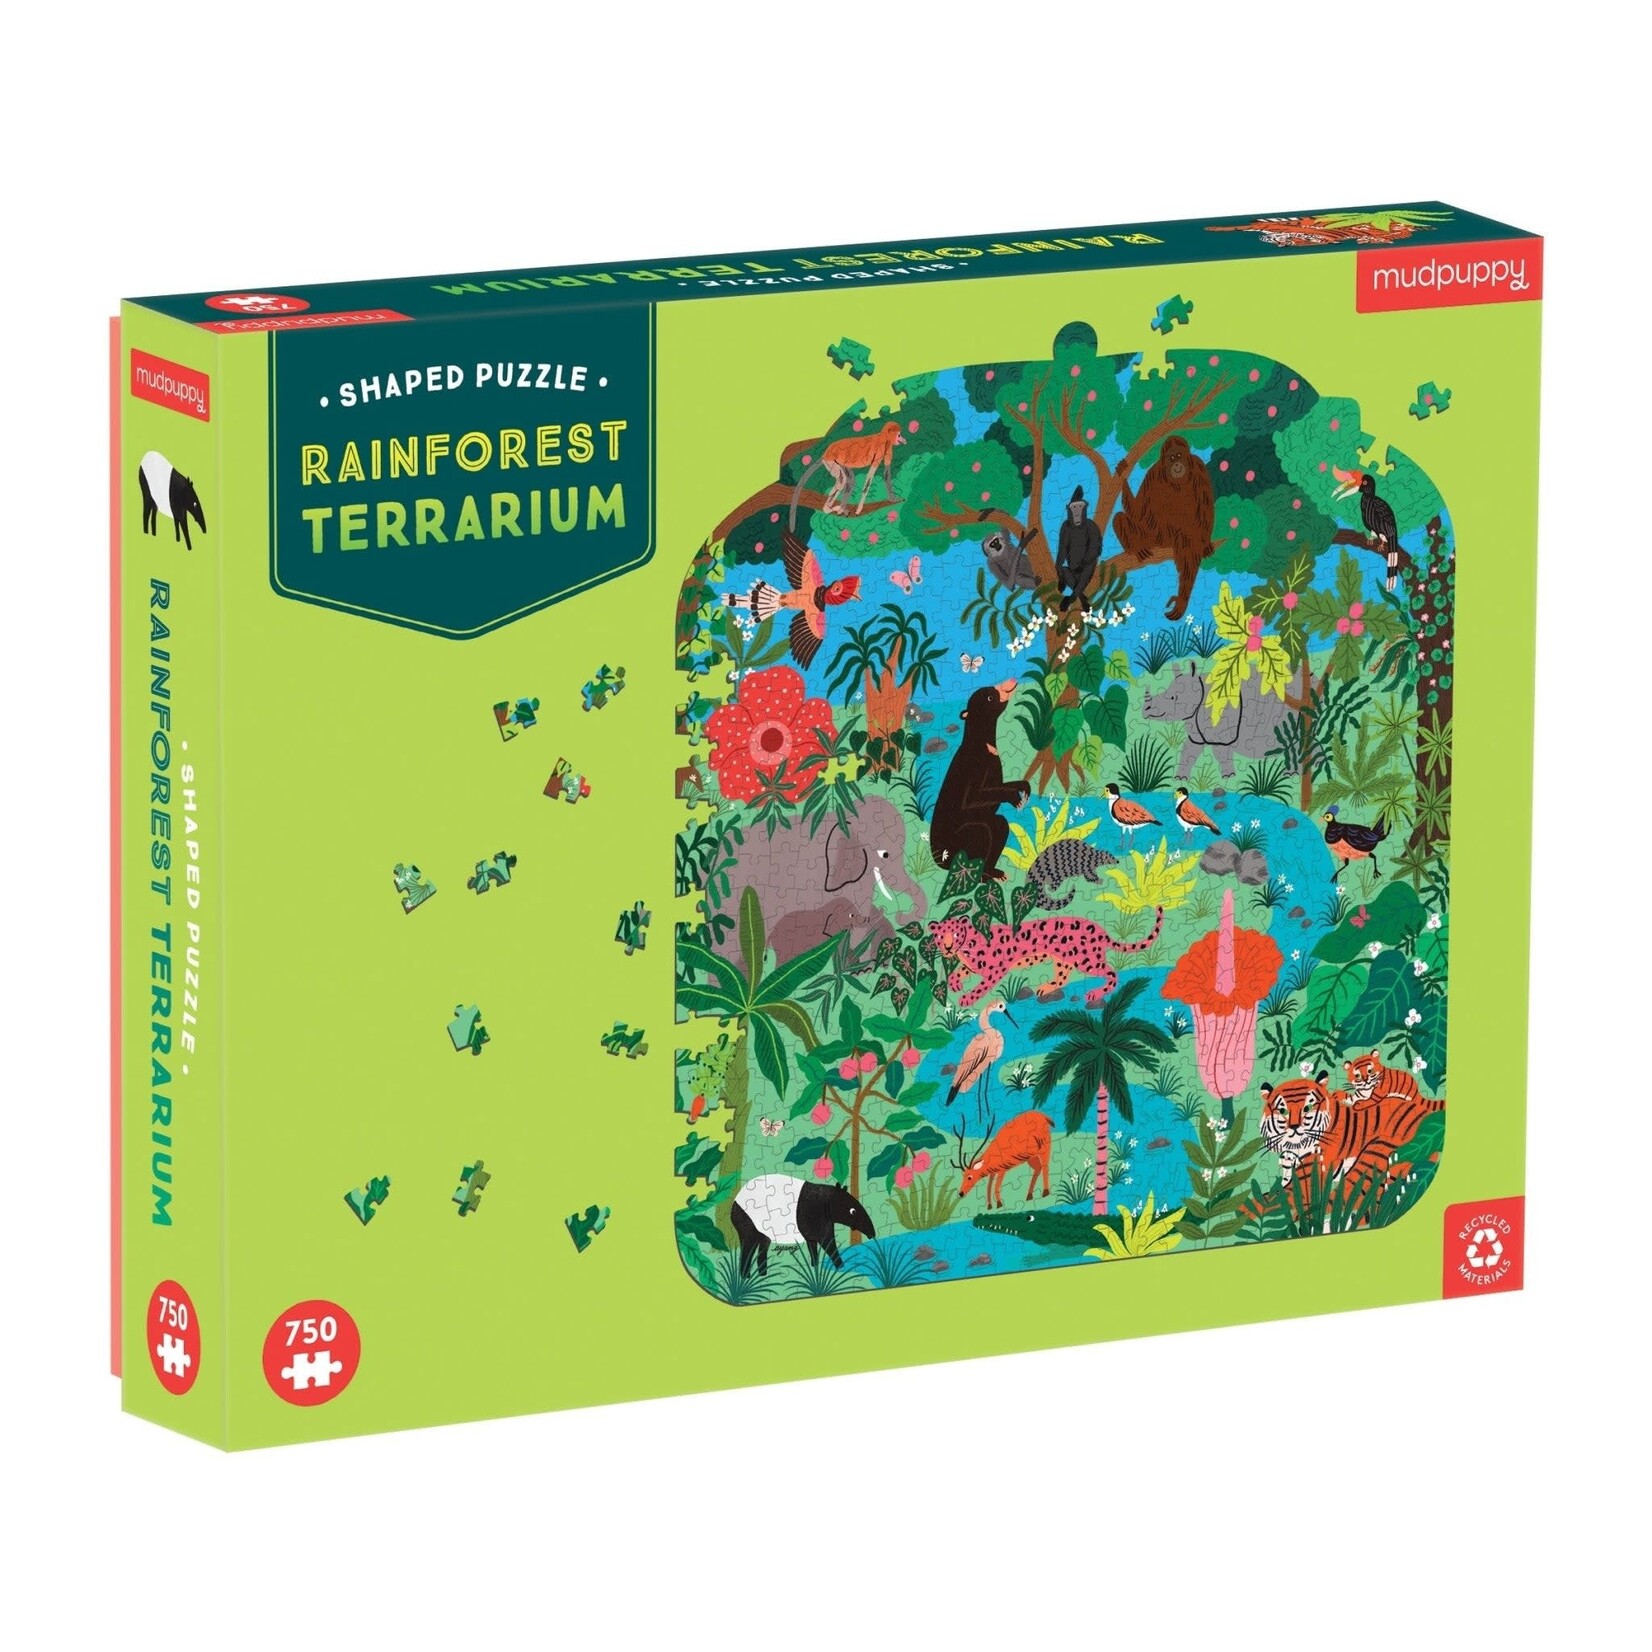 Mudpuppy Shaped Puzzle - Rainforest Terrarium 750 Pieces